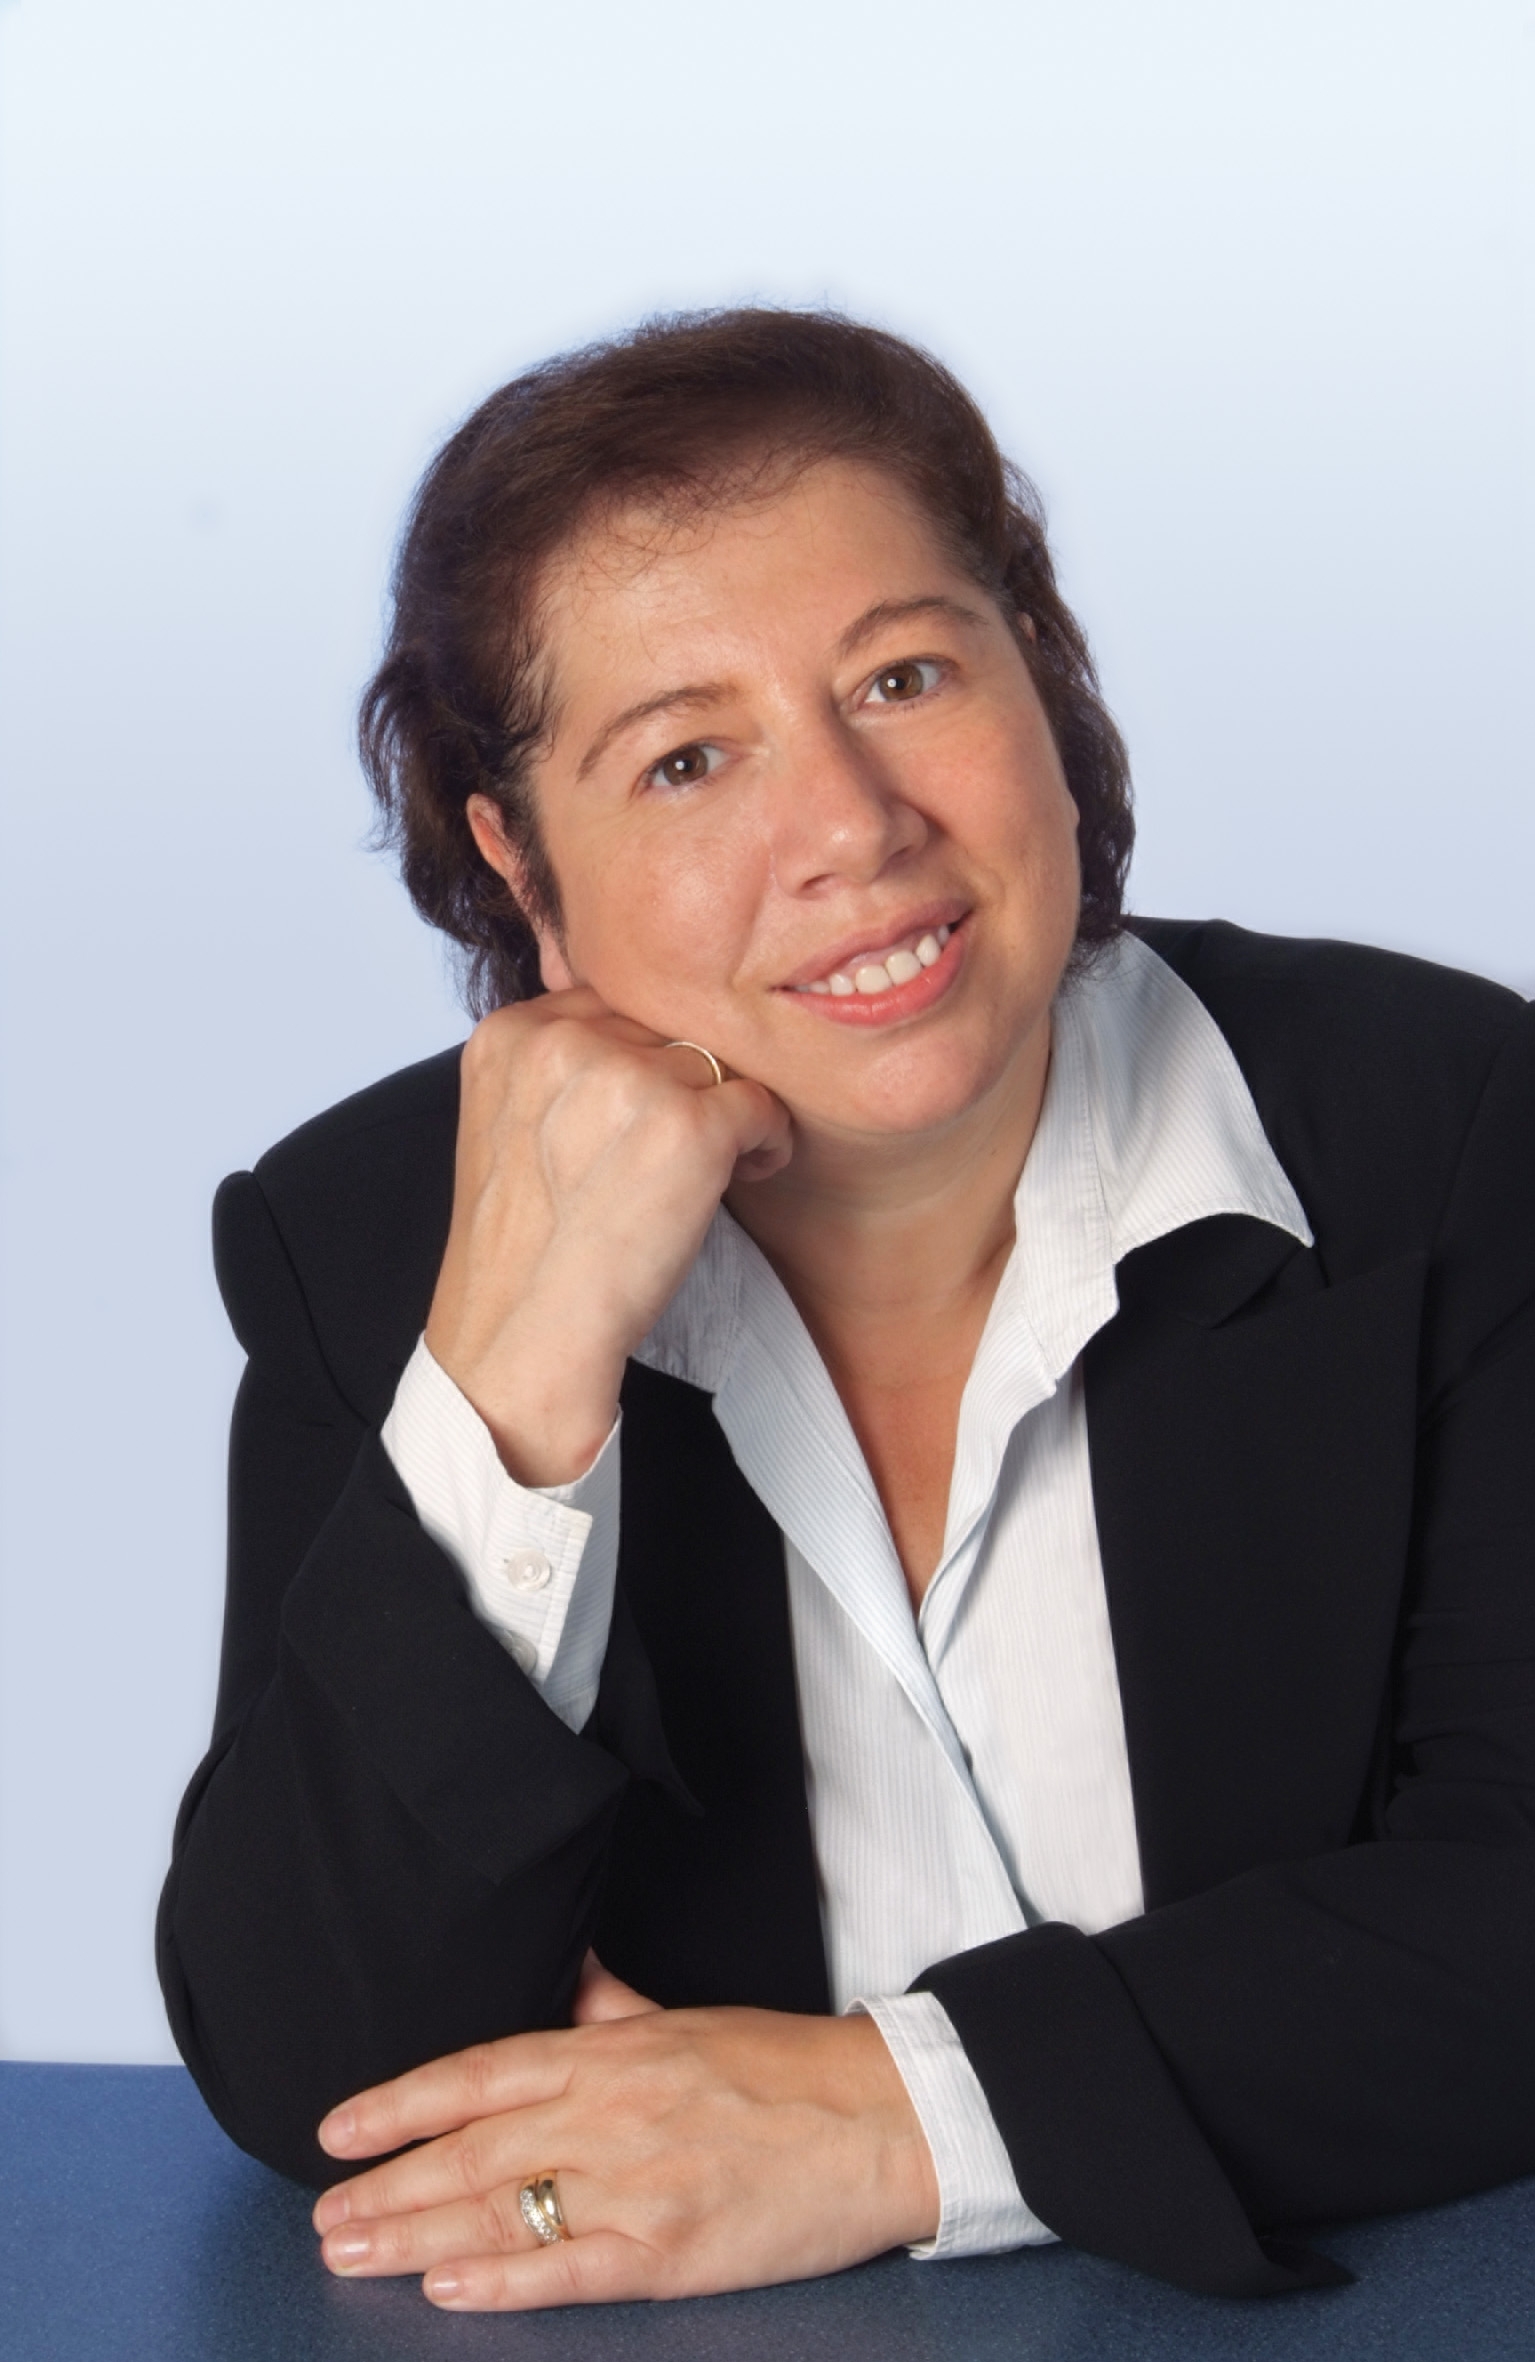 Maria Doronzo - Buchhalterin in Erding